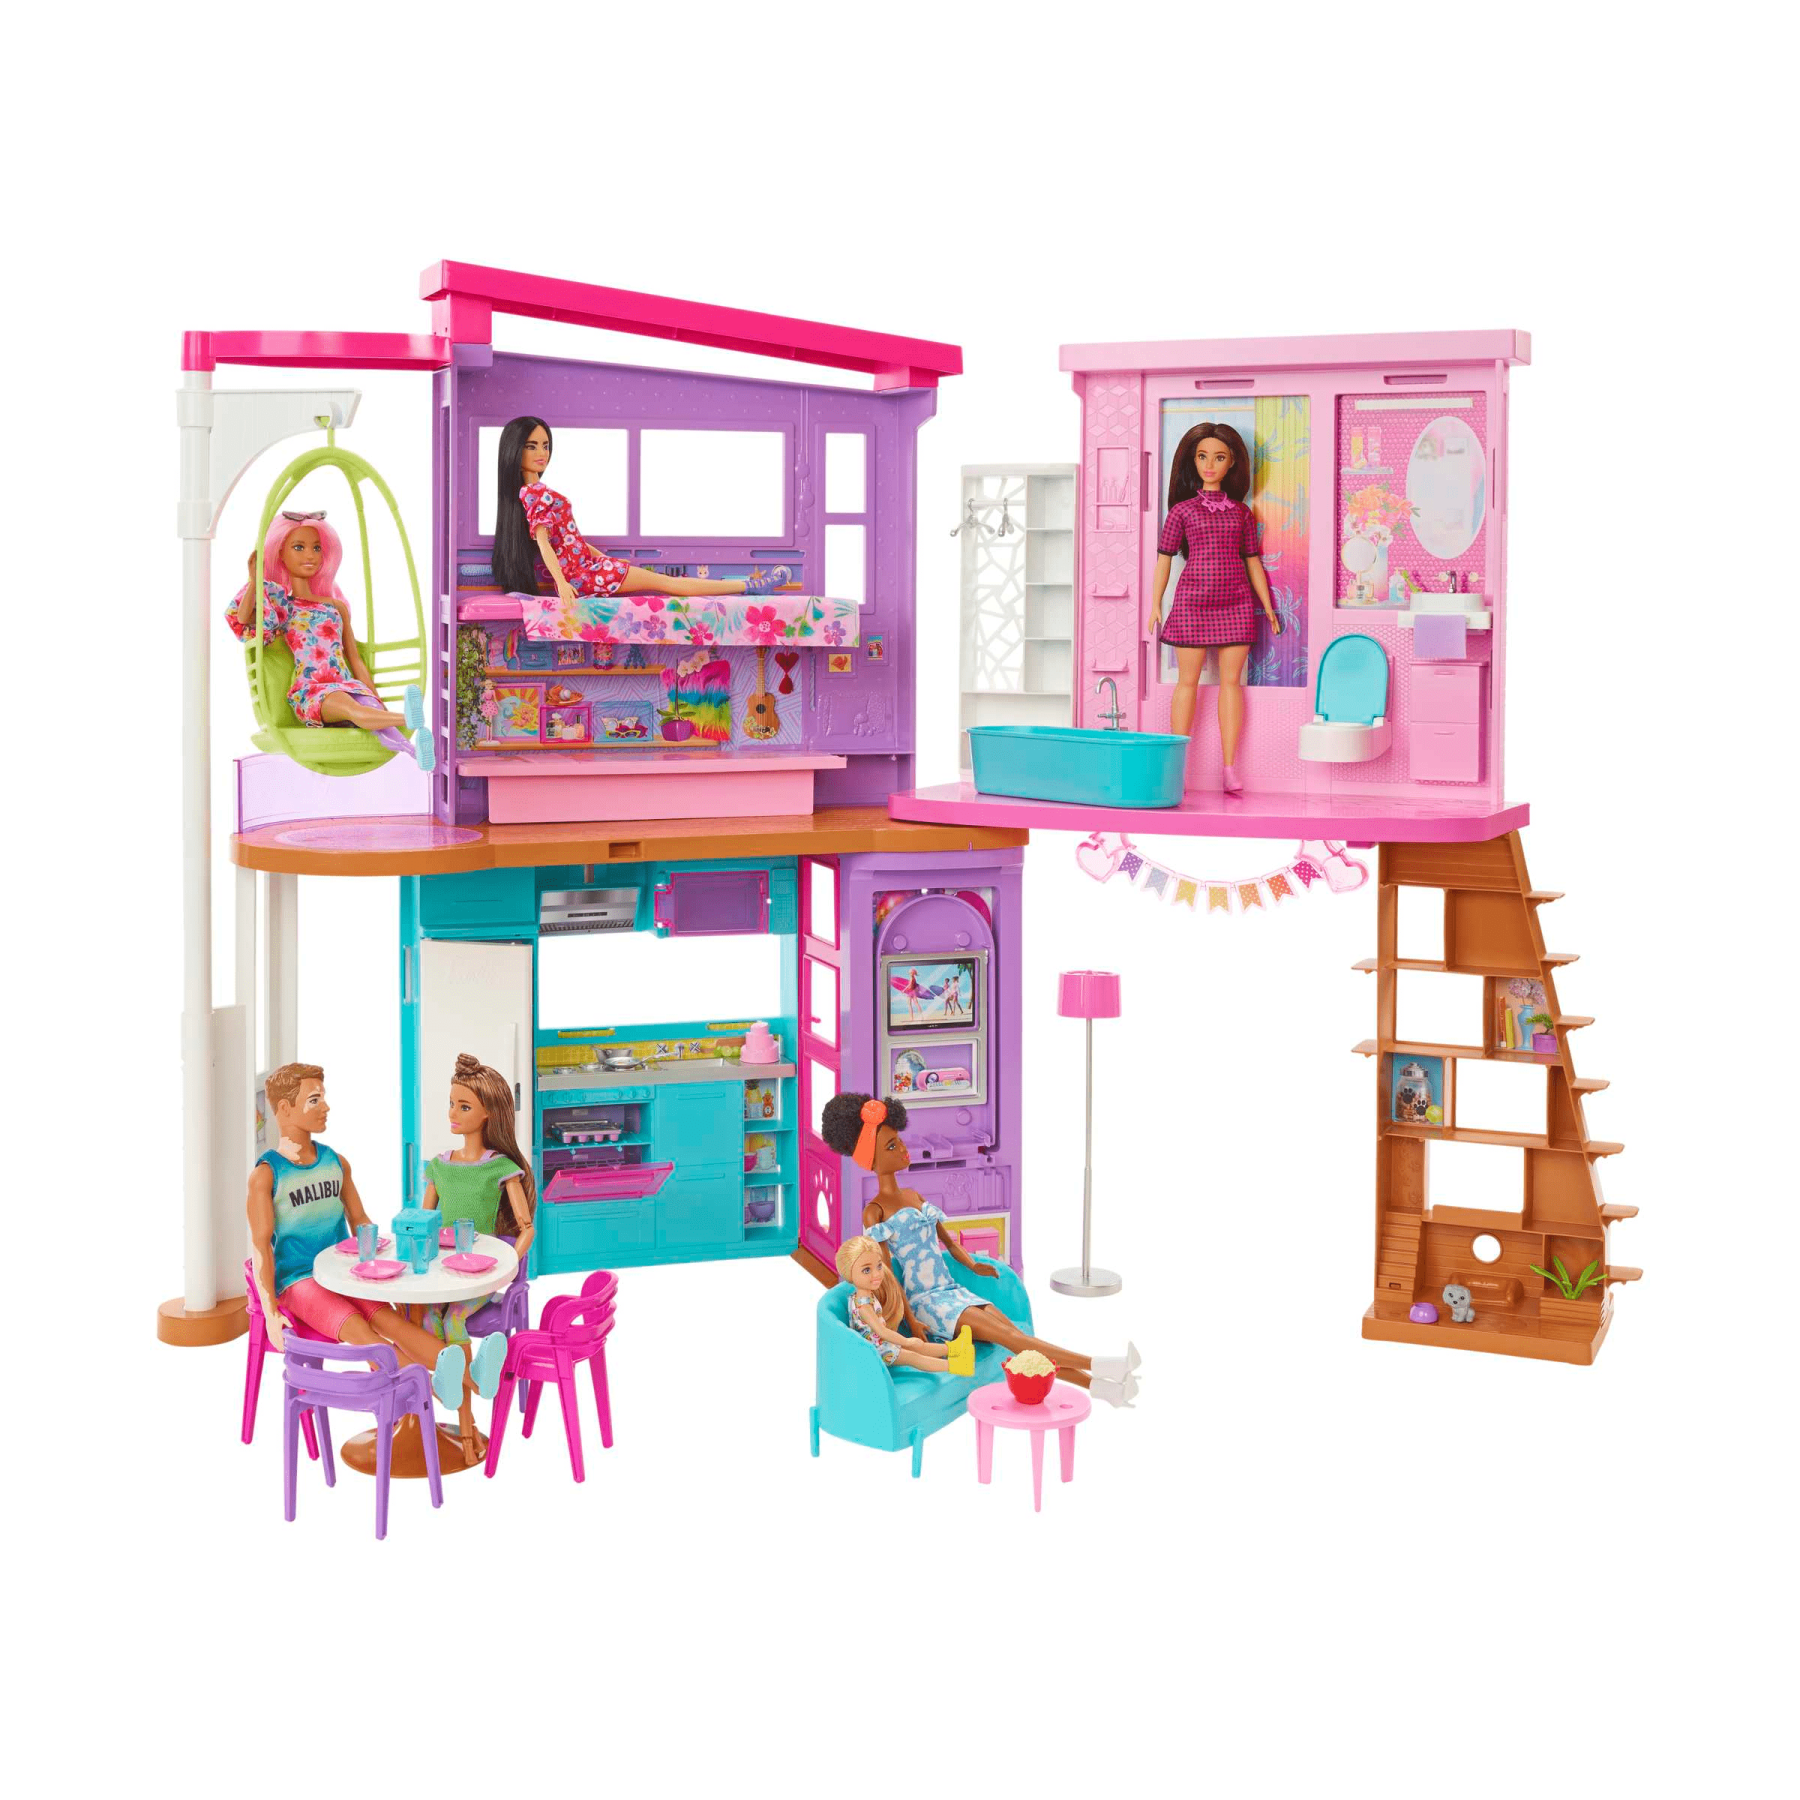 Case delle bambole - Toys Center